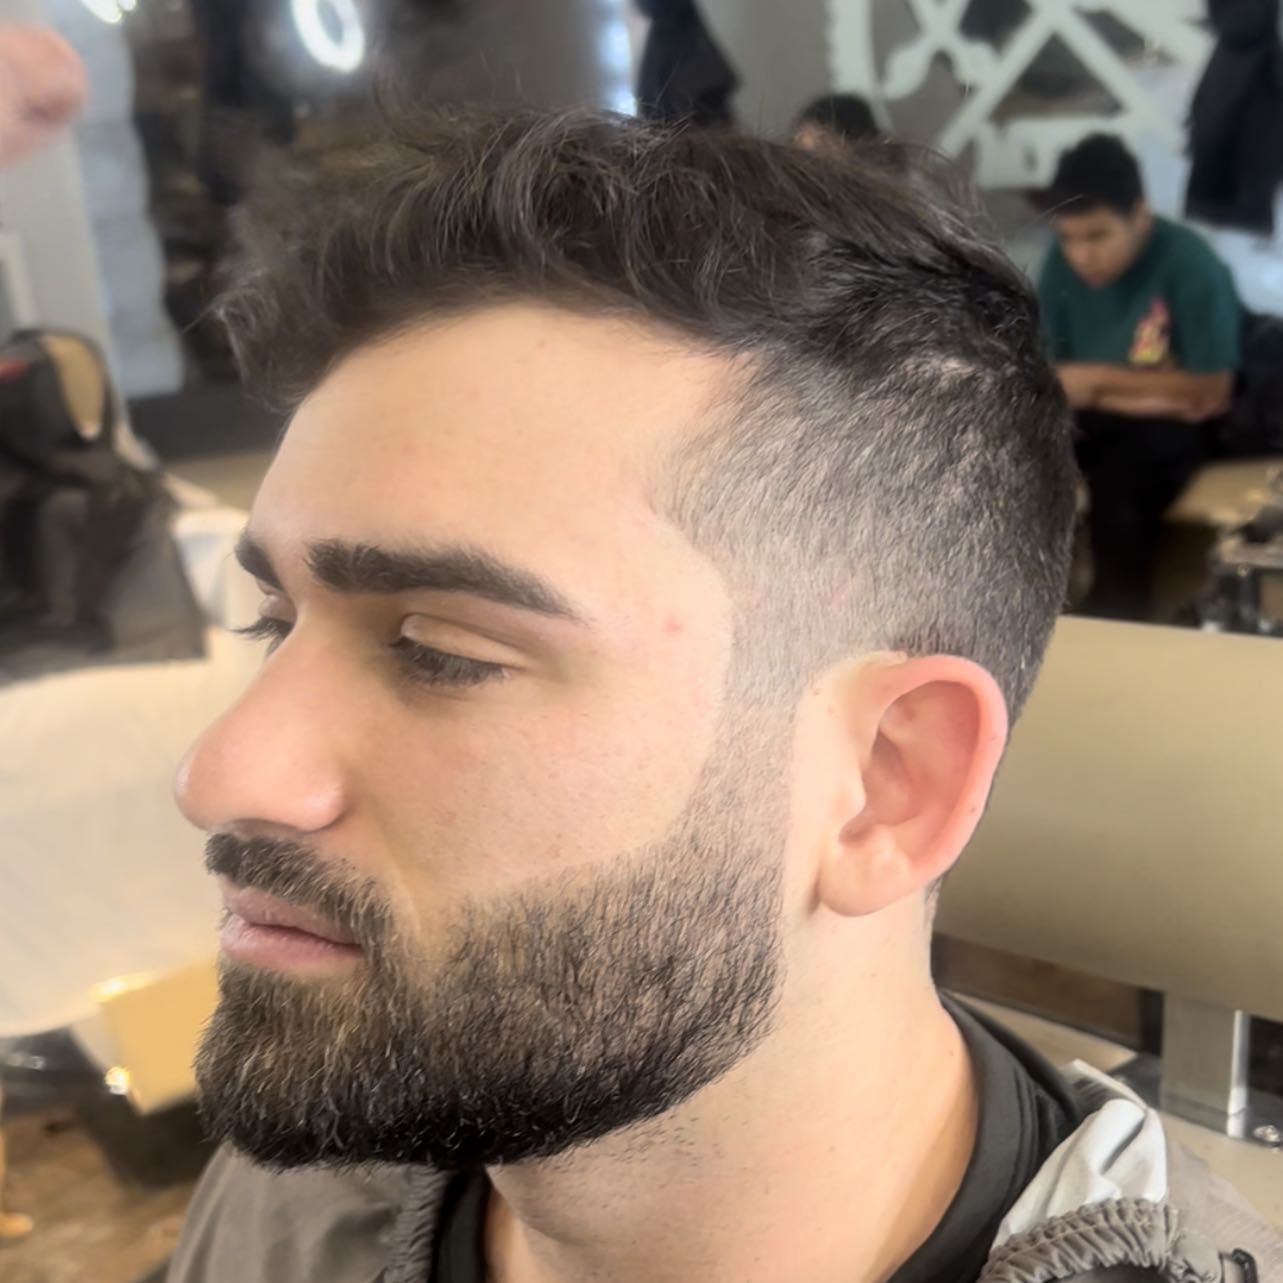 Gentlemen’s haircut W/ Beard portfolio